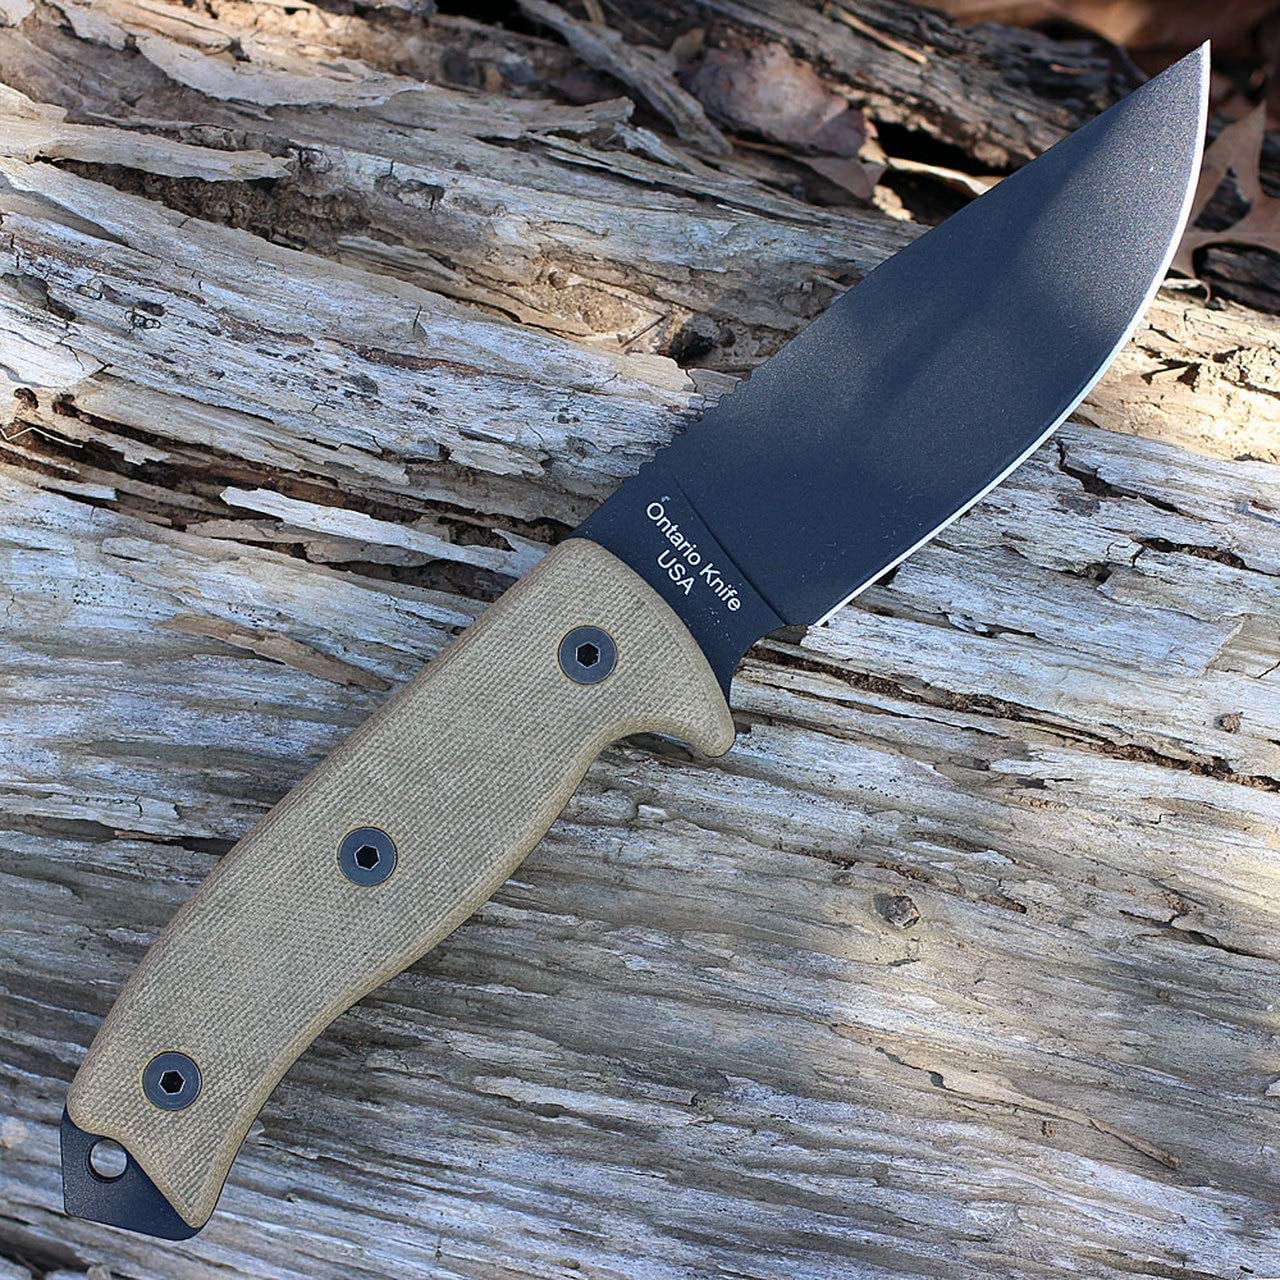 Couteau RAT 5 W avec étui Nylon - Ontario Knife